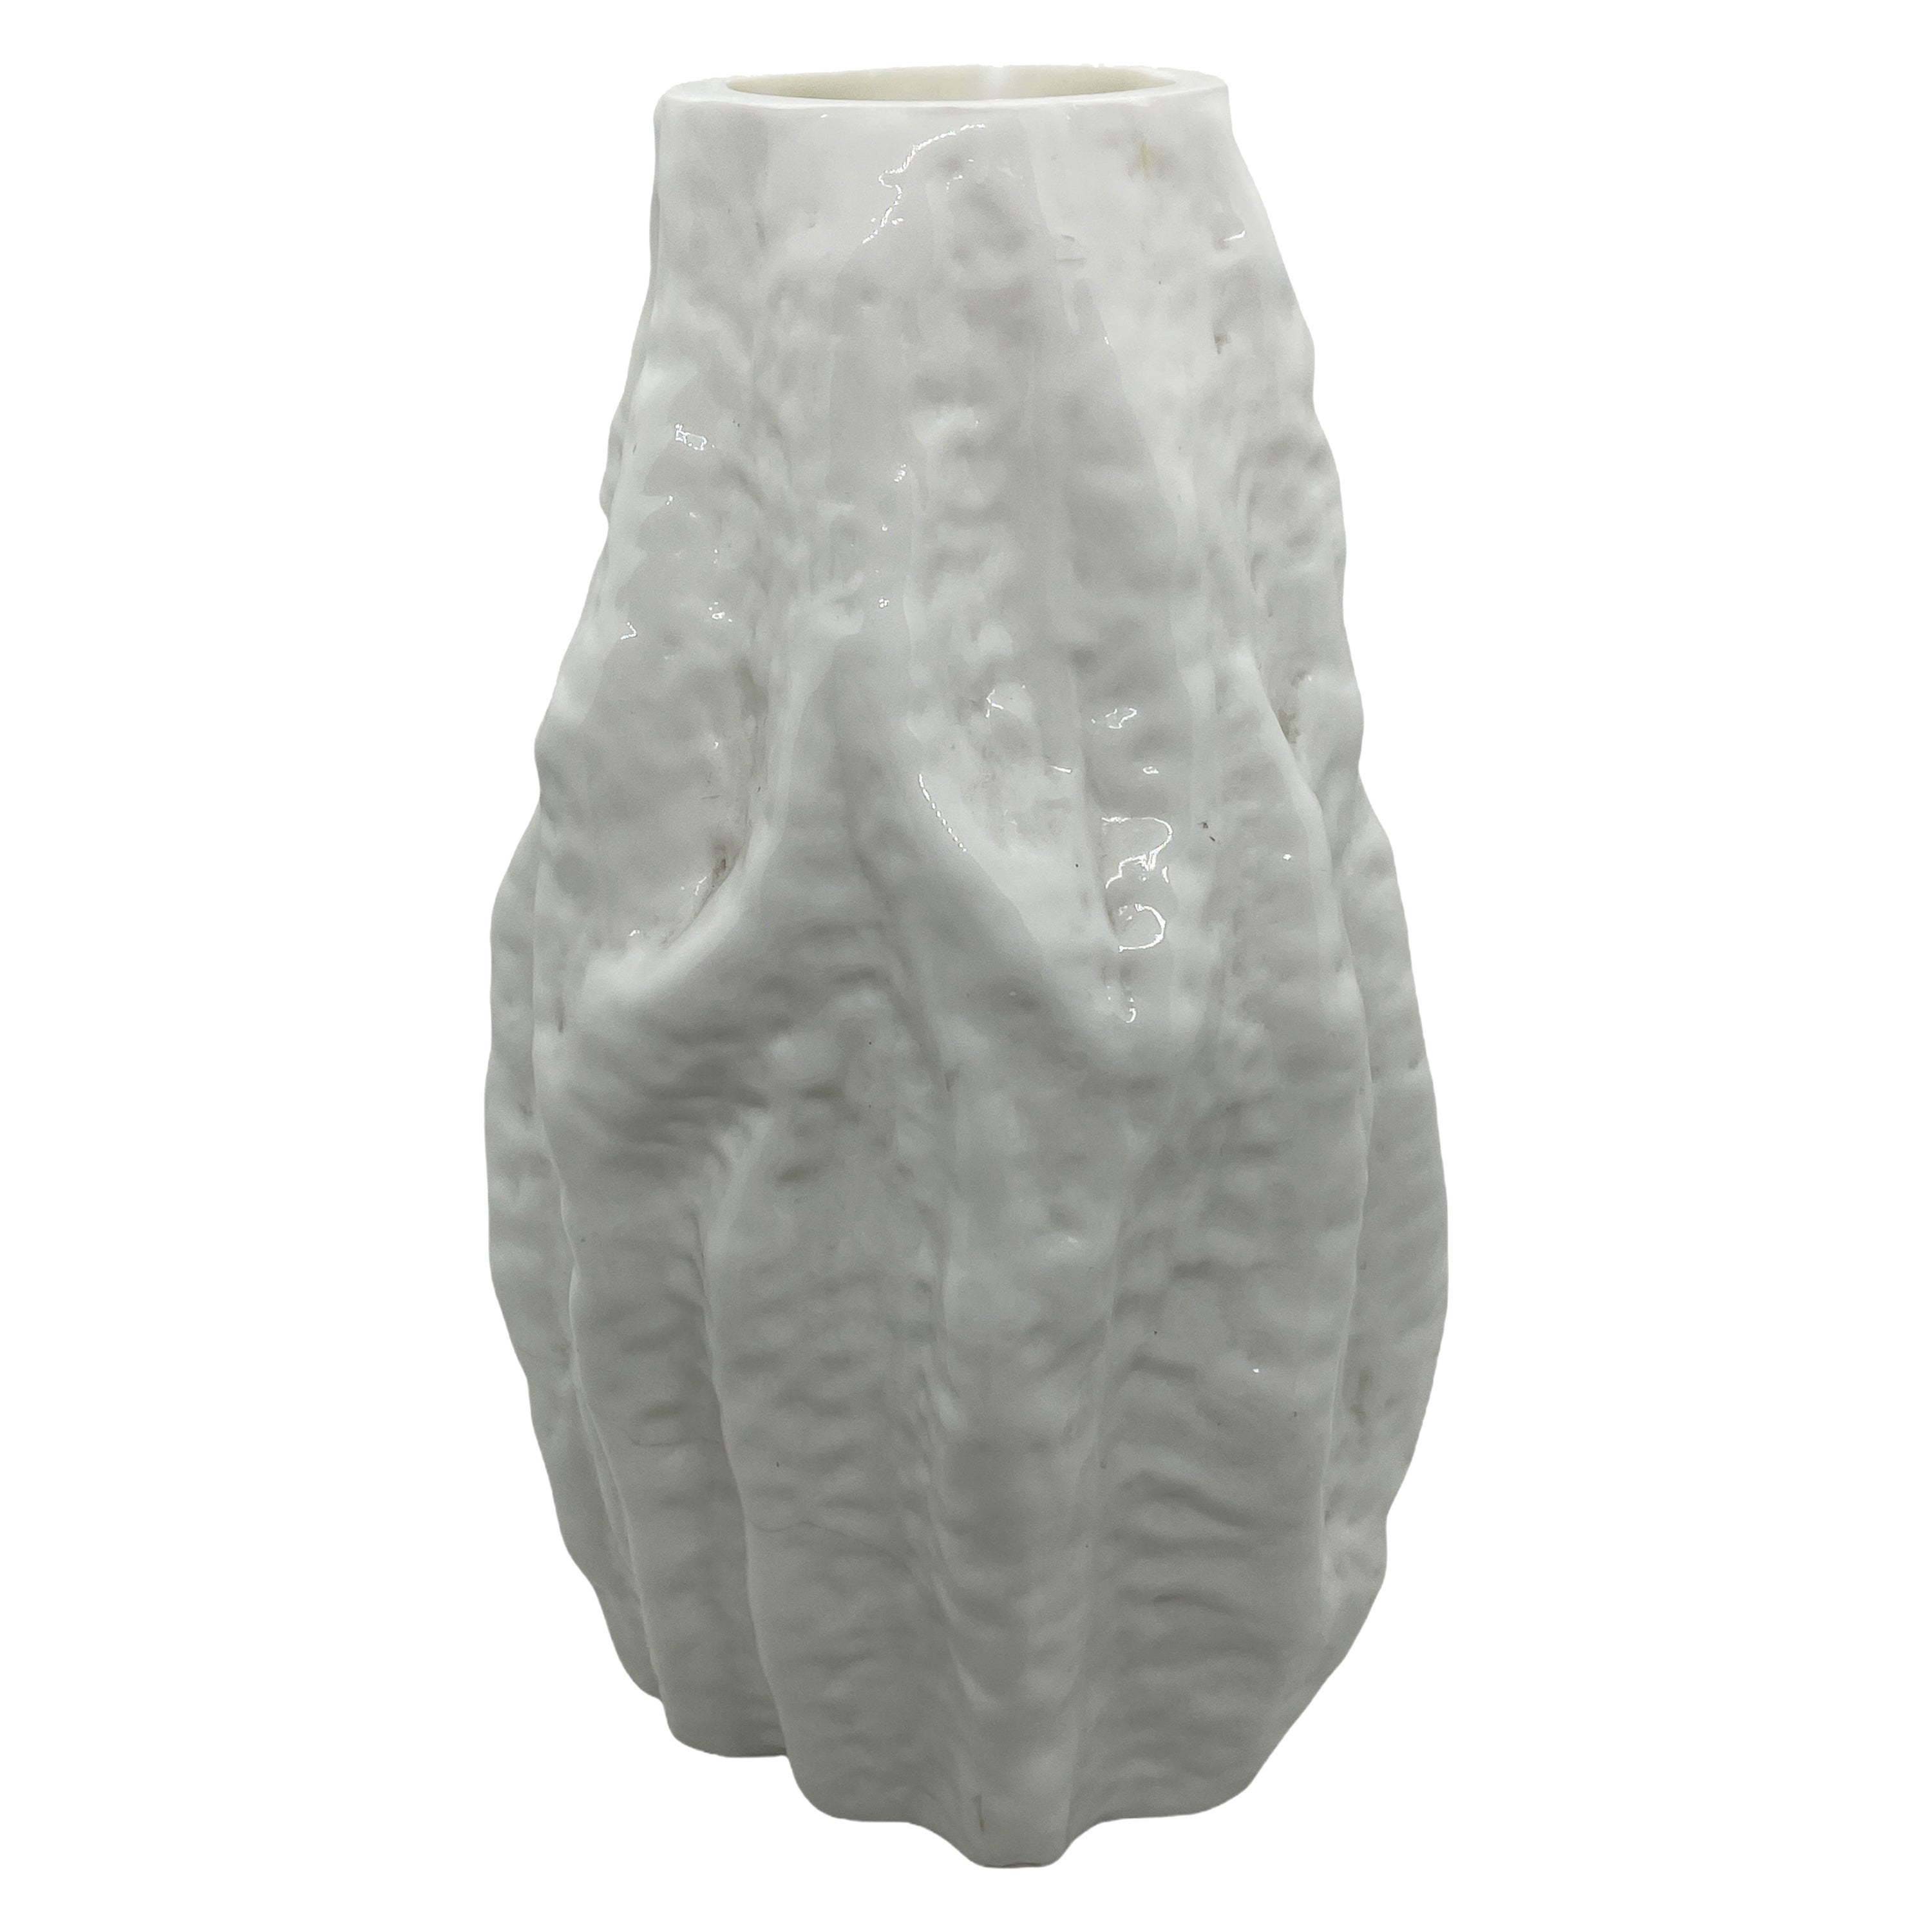 Stunning German Brutalist White Glass Rock Vase 1970s Mid-Century Modern For Sale